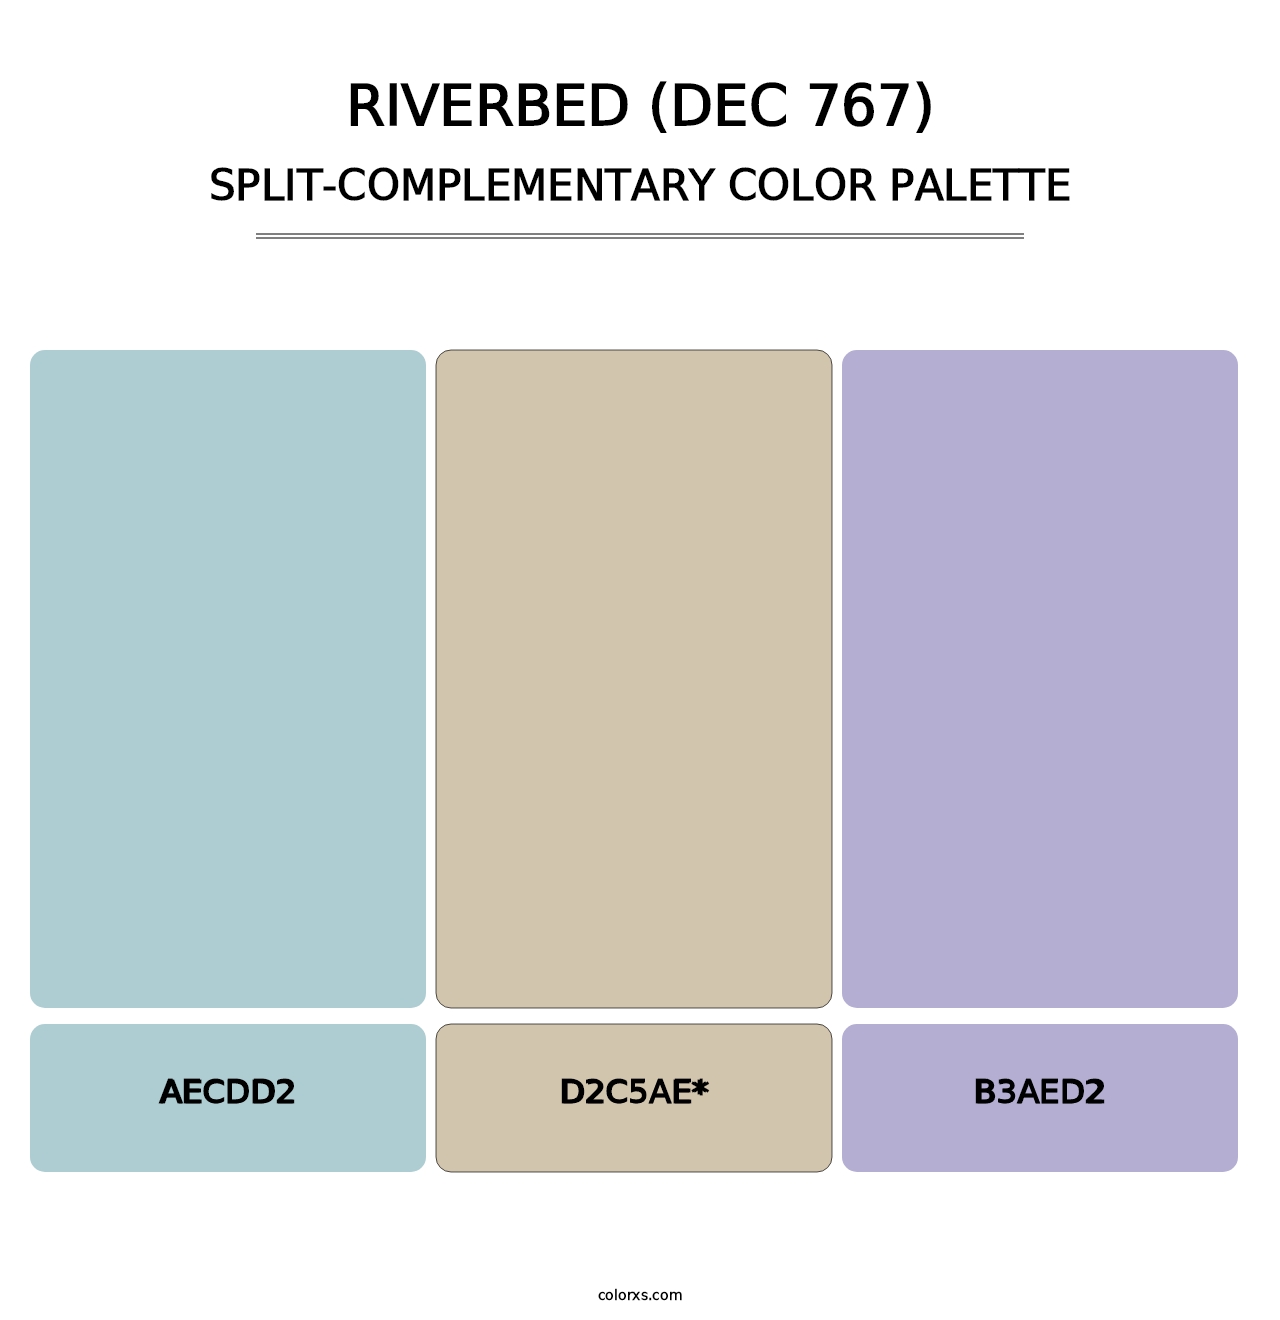 Riverbed (DEC 767) - Split-Complementary Color Palette